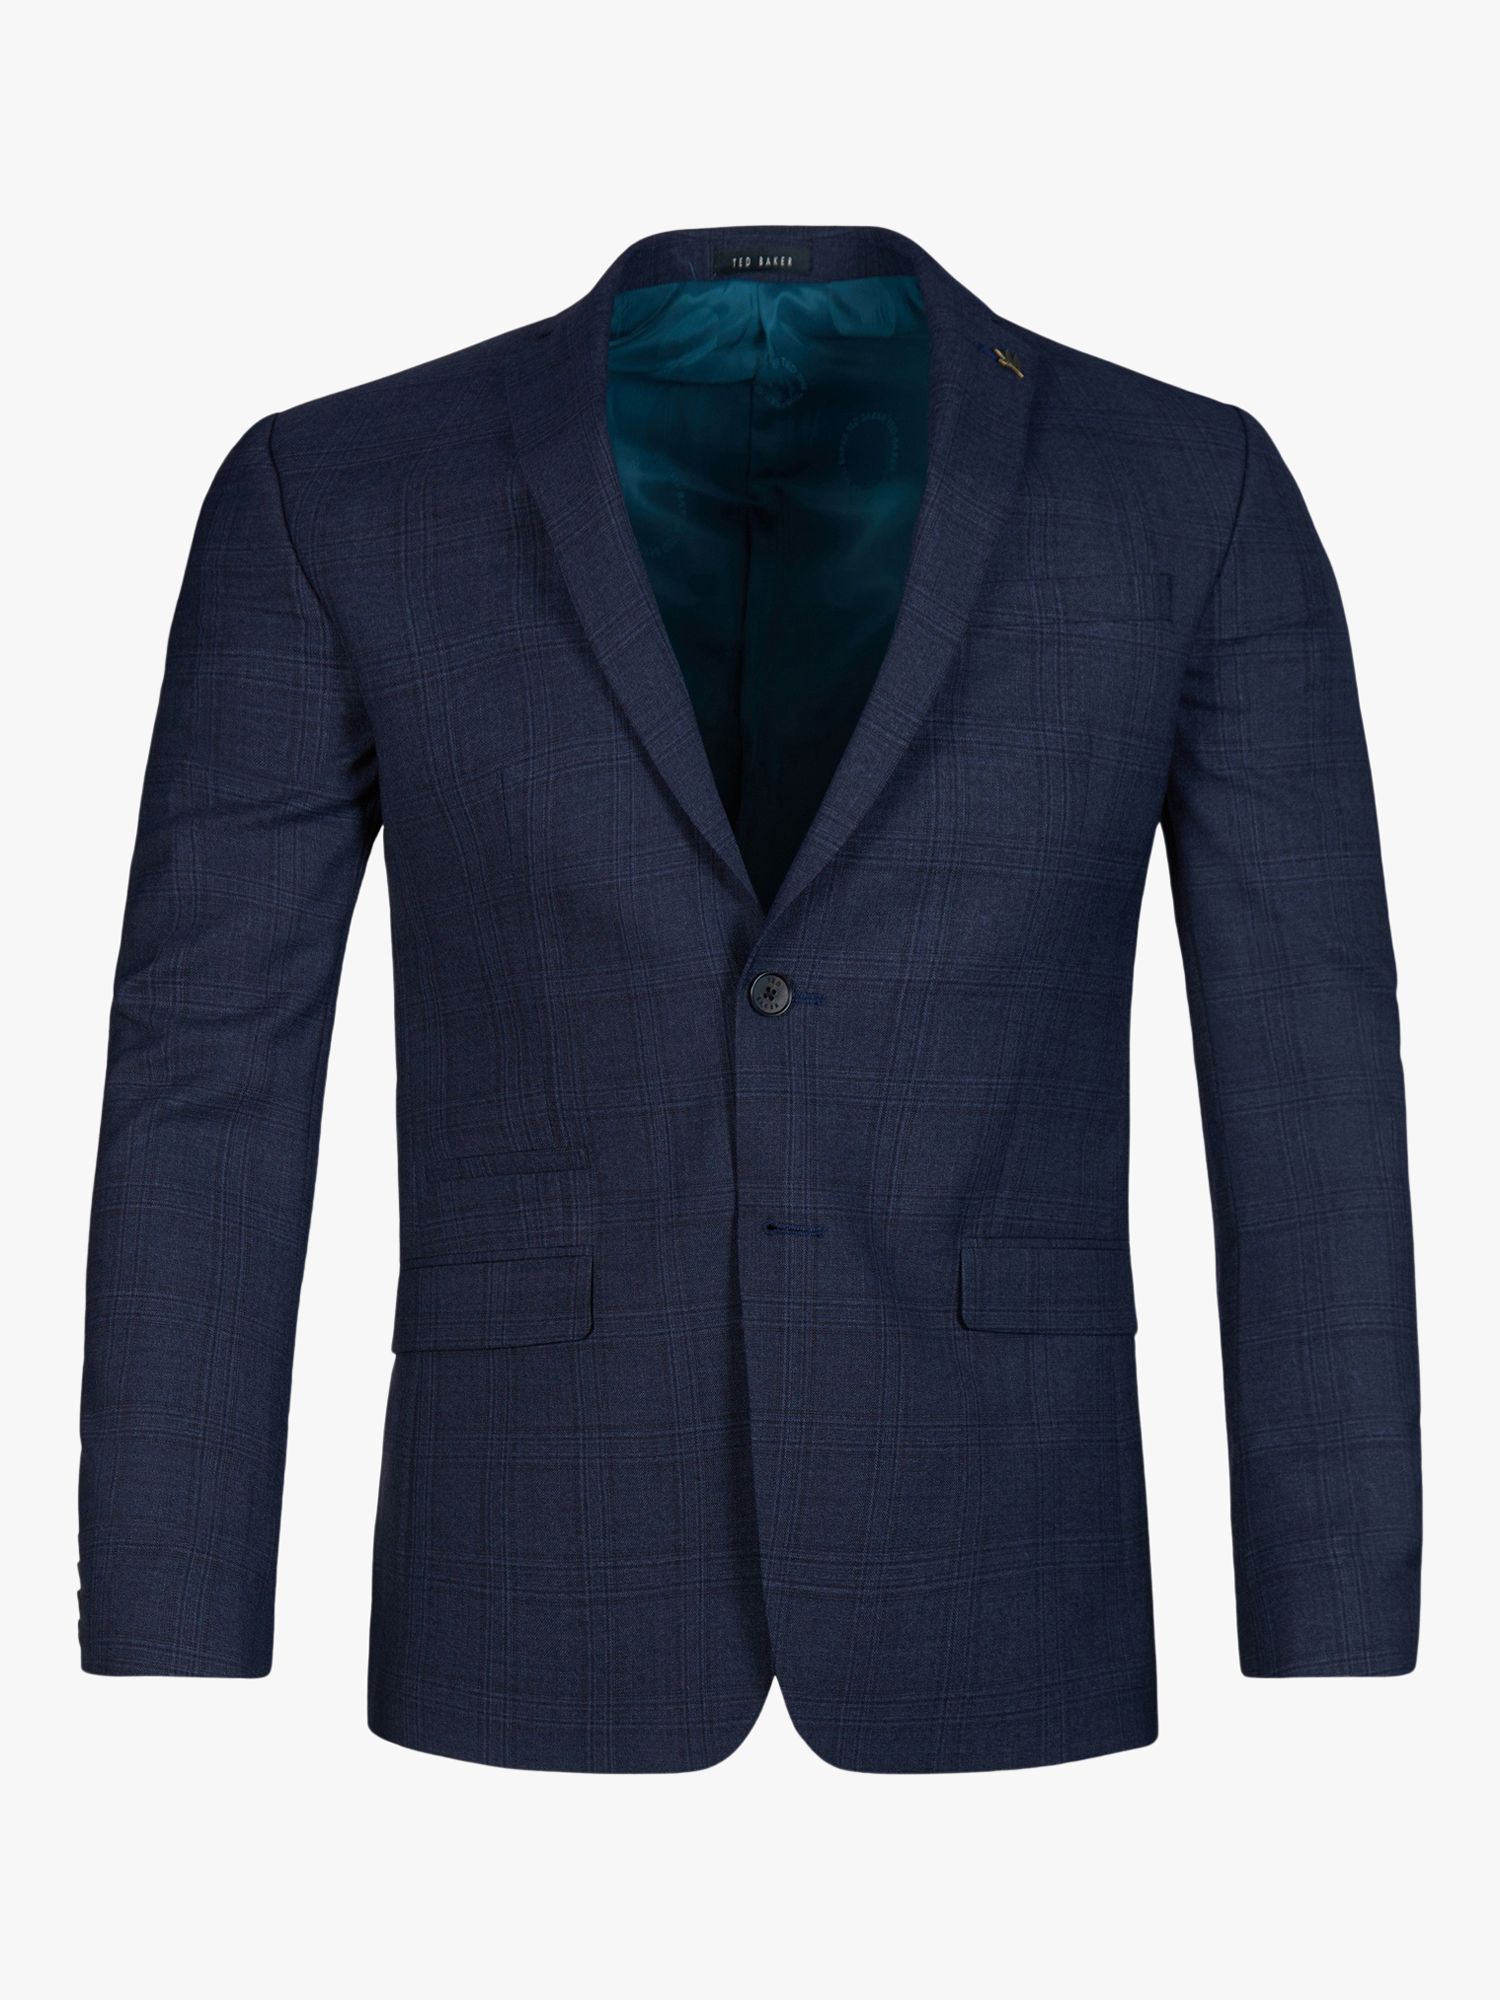 Ted Baker Ara Slim Fit Textured Check Wool Blend Suit Jacket, Navy, 42S